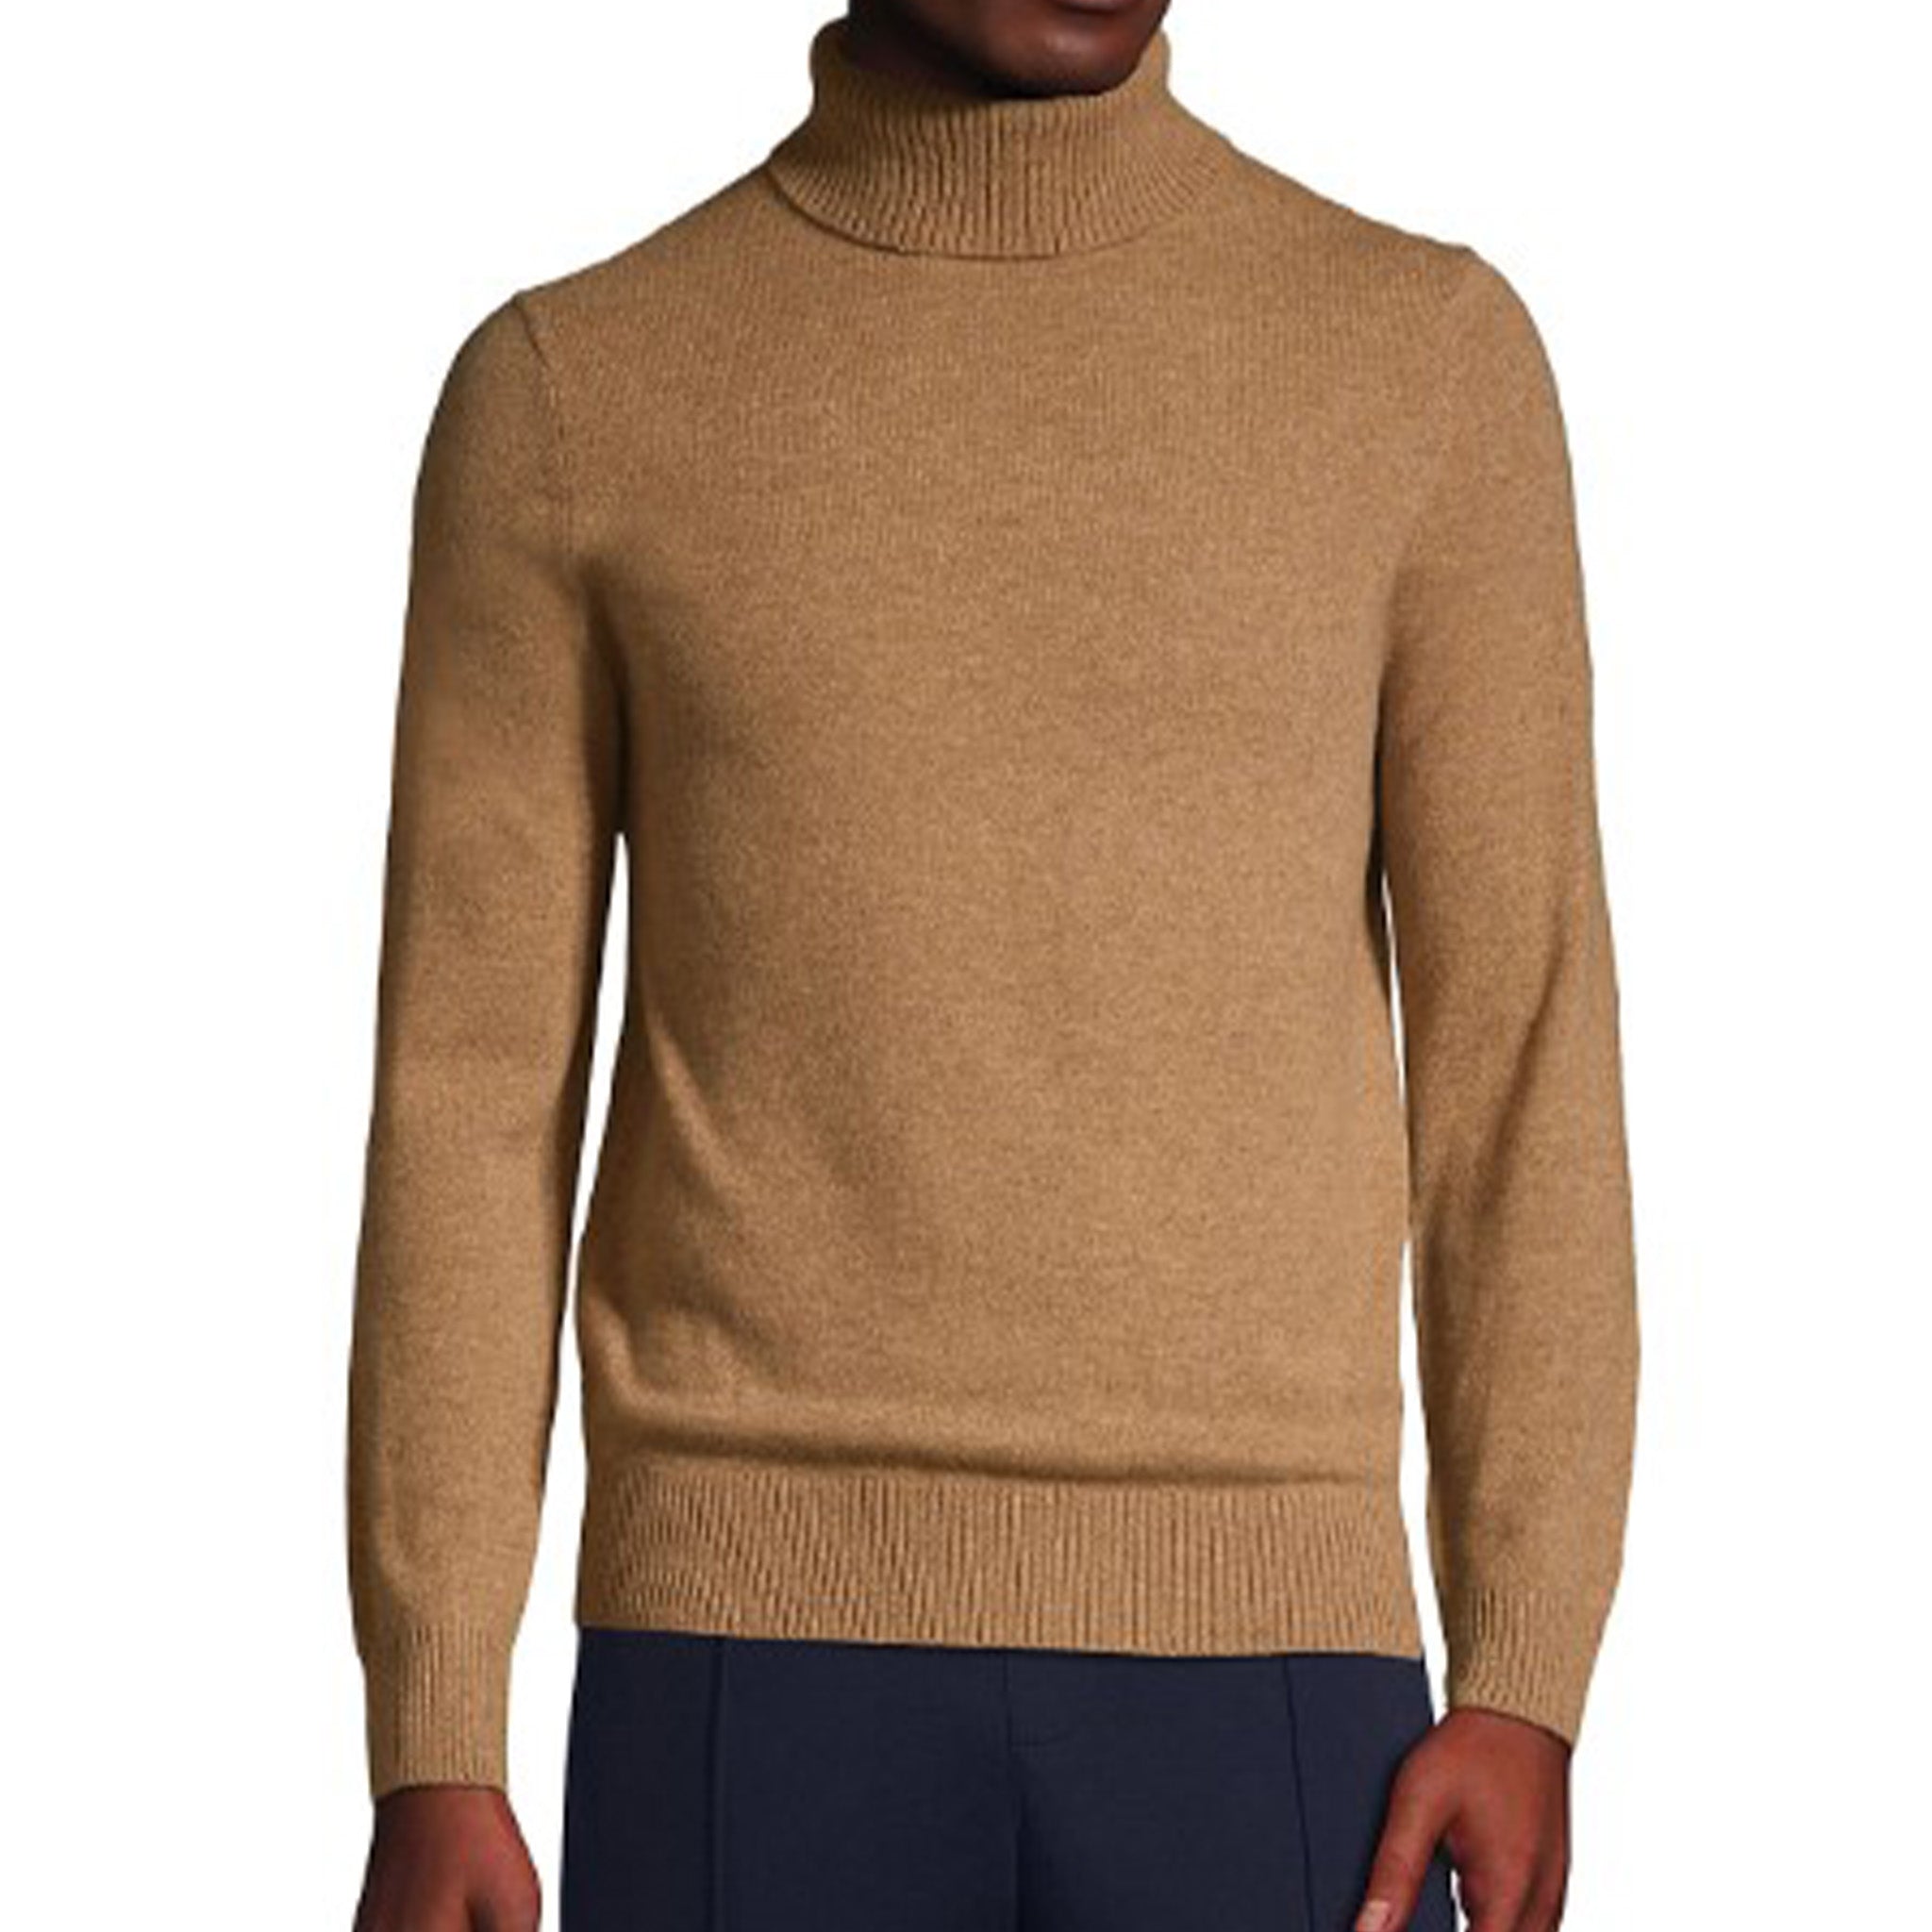 Men's Tan Turtle Neck Sweater